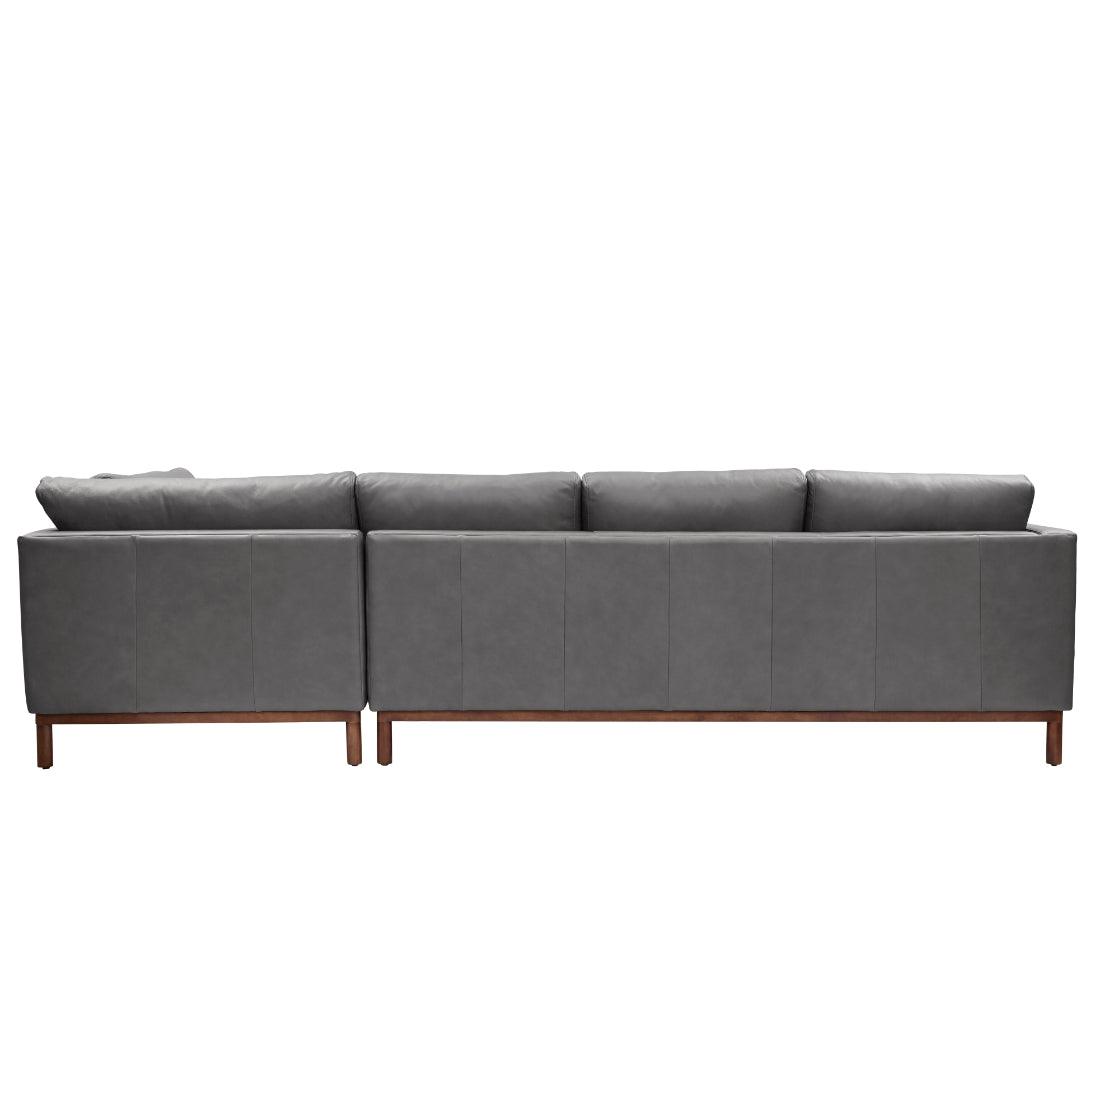 Burbank Large Leather Right Facing Sectional Sofa - Uptown Sebastian